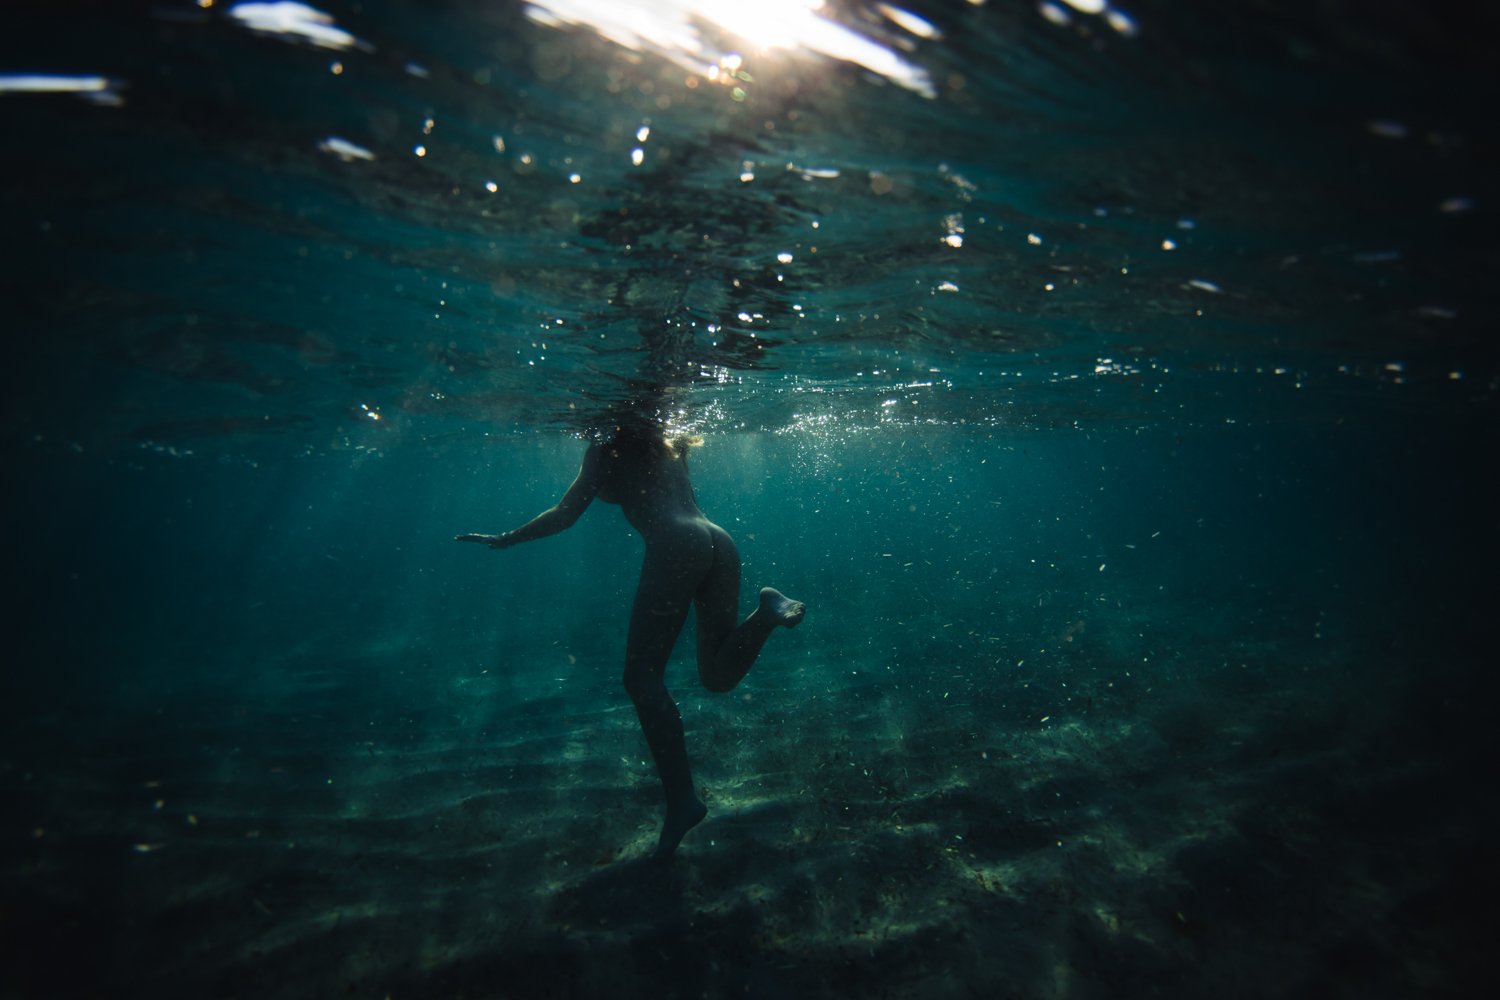 underwater corse corsica sea mediterranean island france french photographer photographe ajaccio Krista Espino Capo di feno wave nude nue femme woman fine art photography-3.jpg